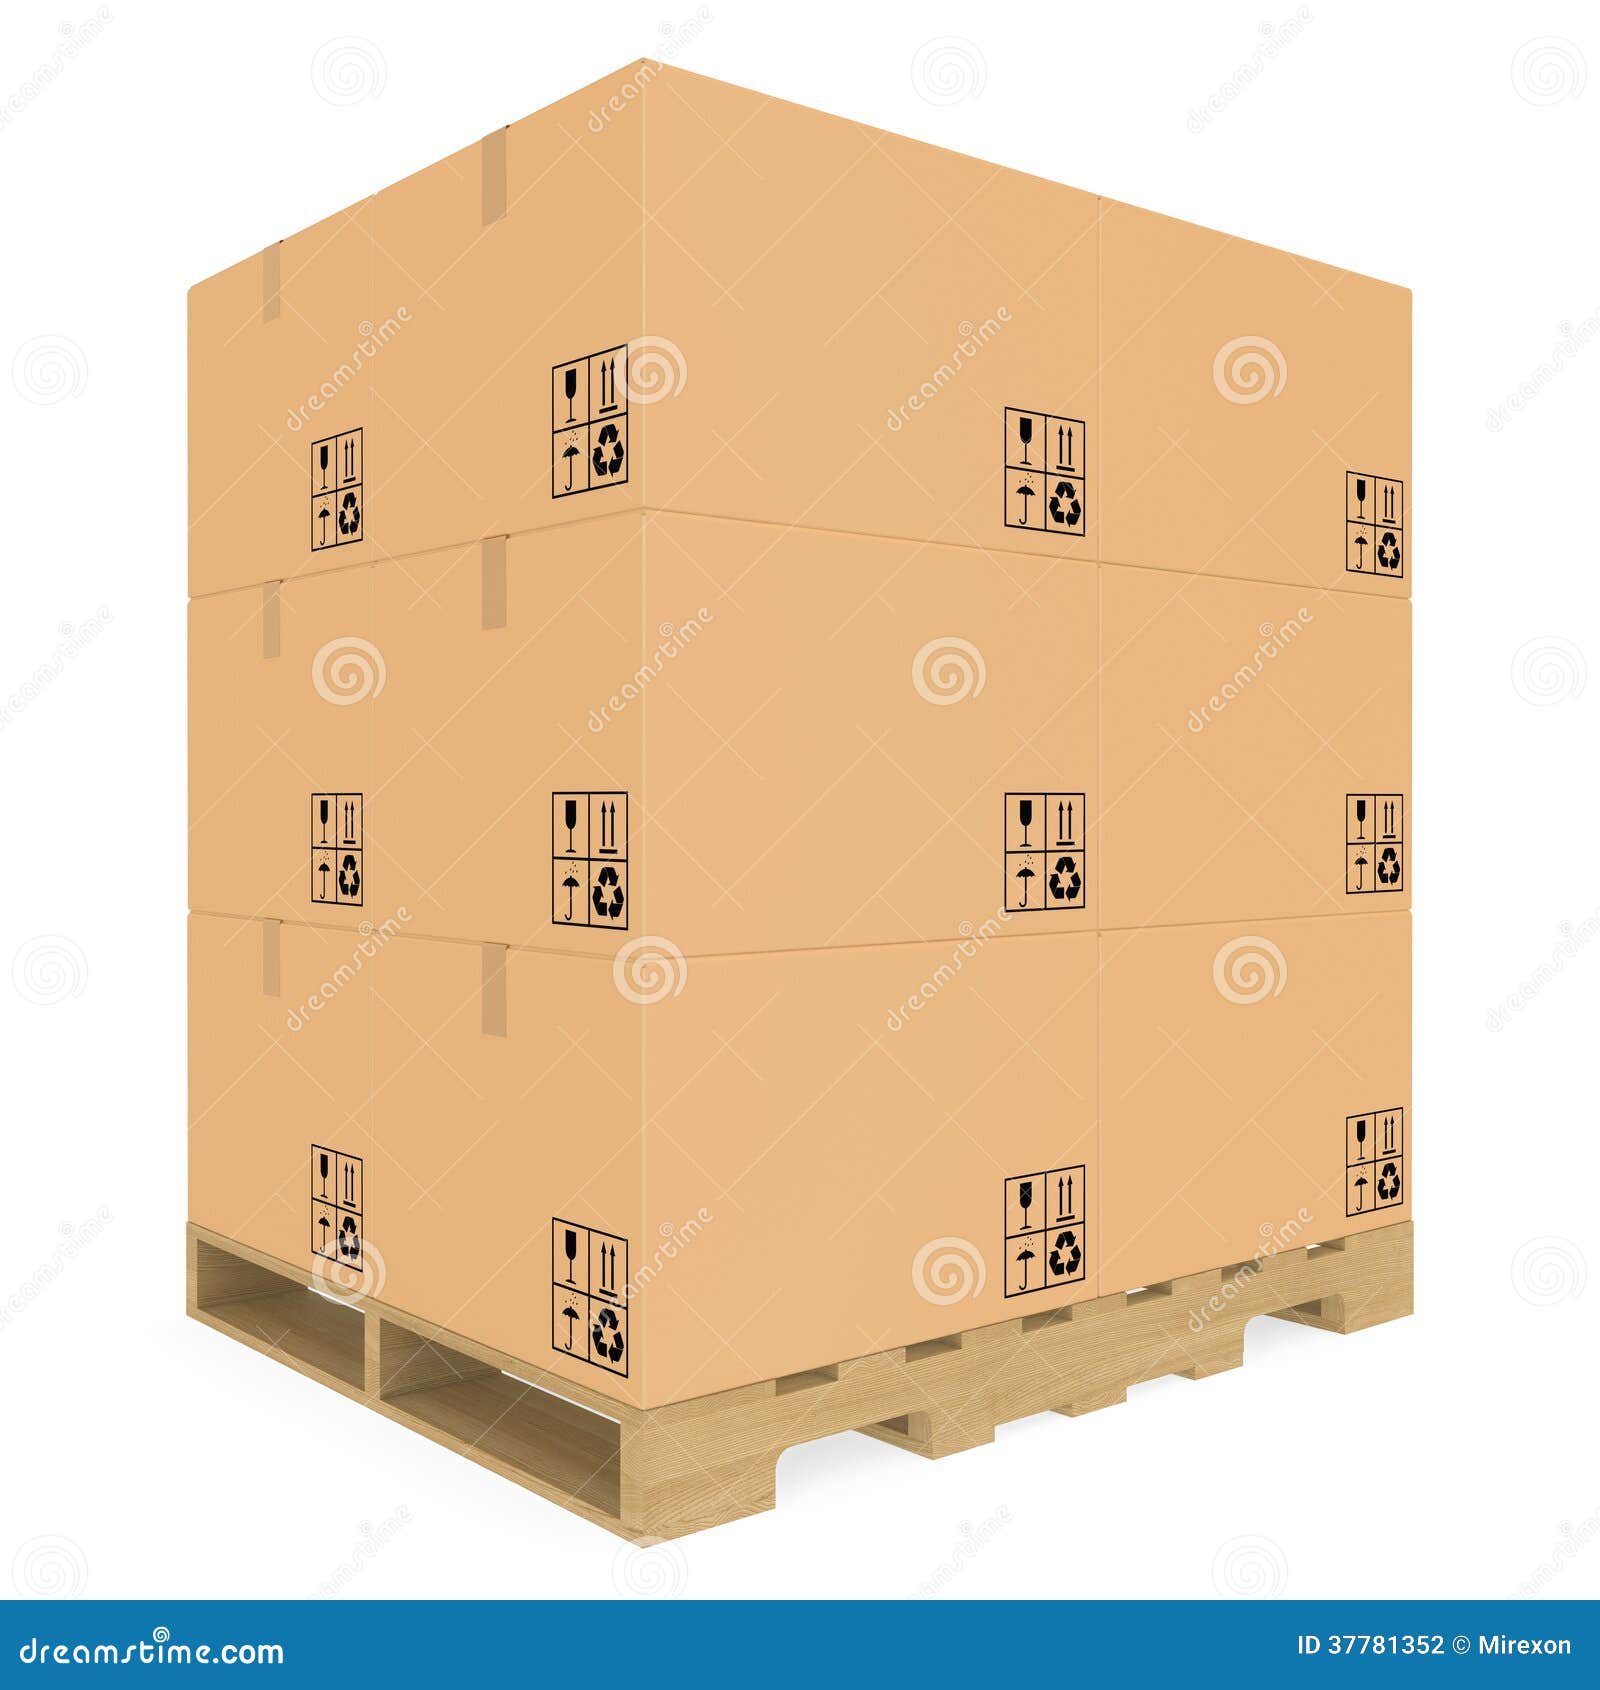 Сколько коробок на китайском. Коробки на паллете. Коробки на европаллете. Укладка коробок на паллете. Поддон с коробками.